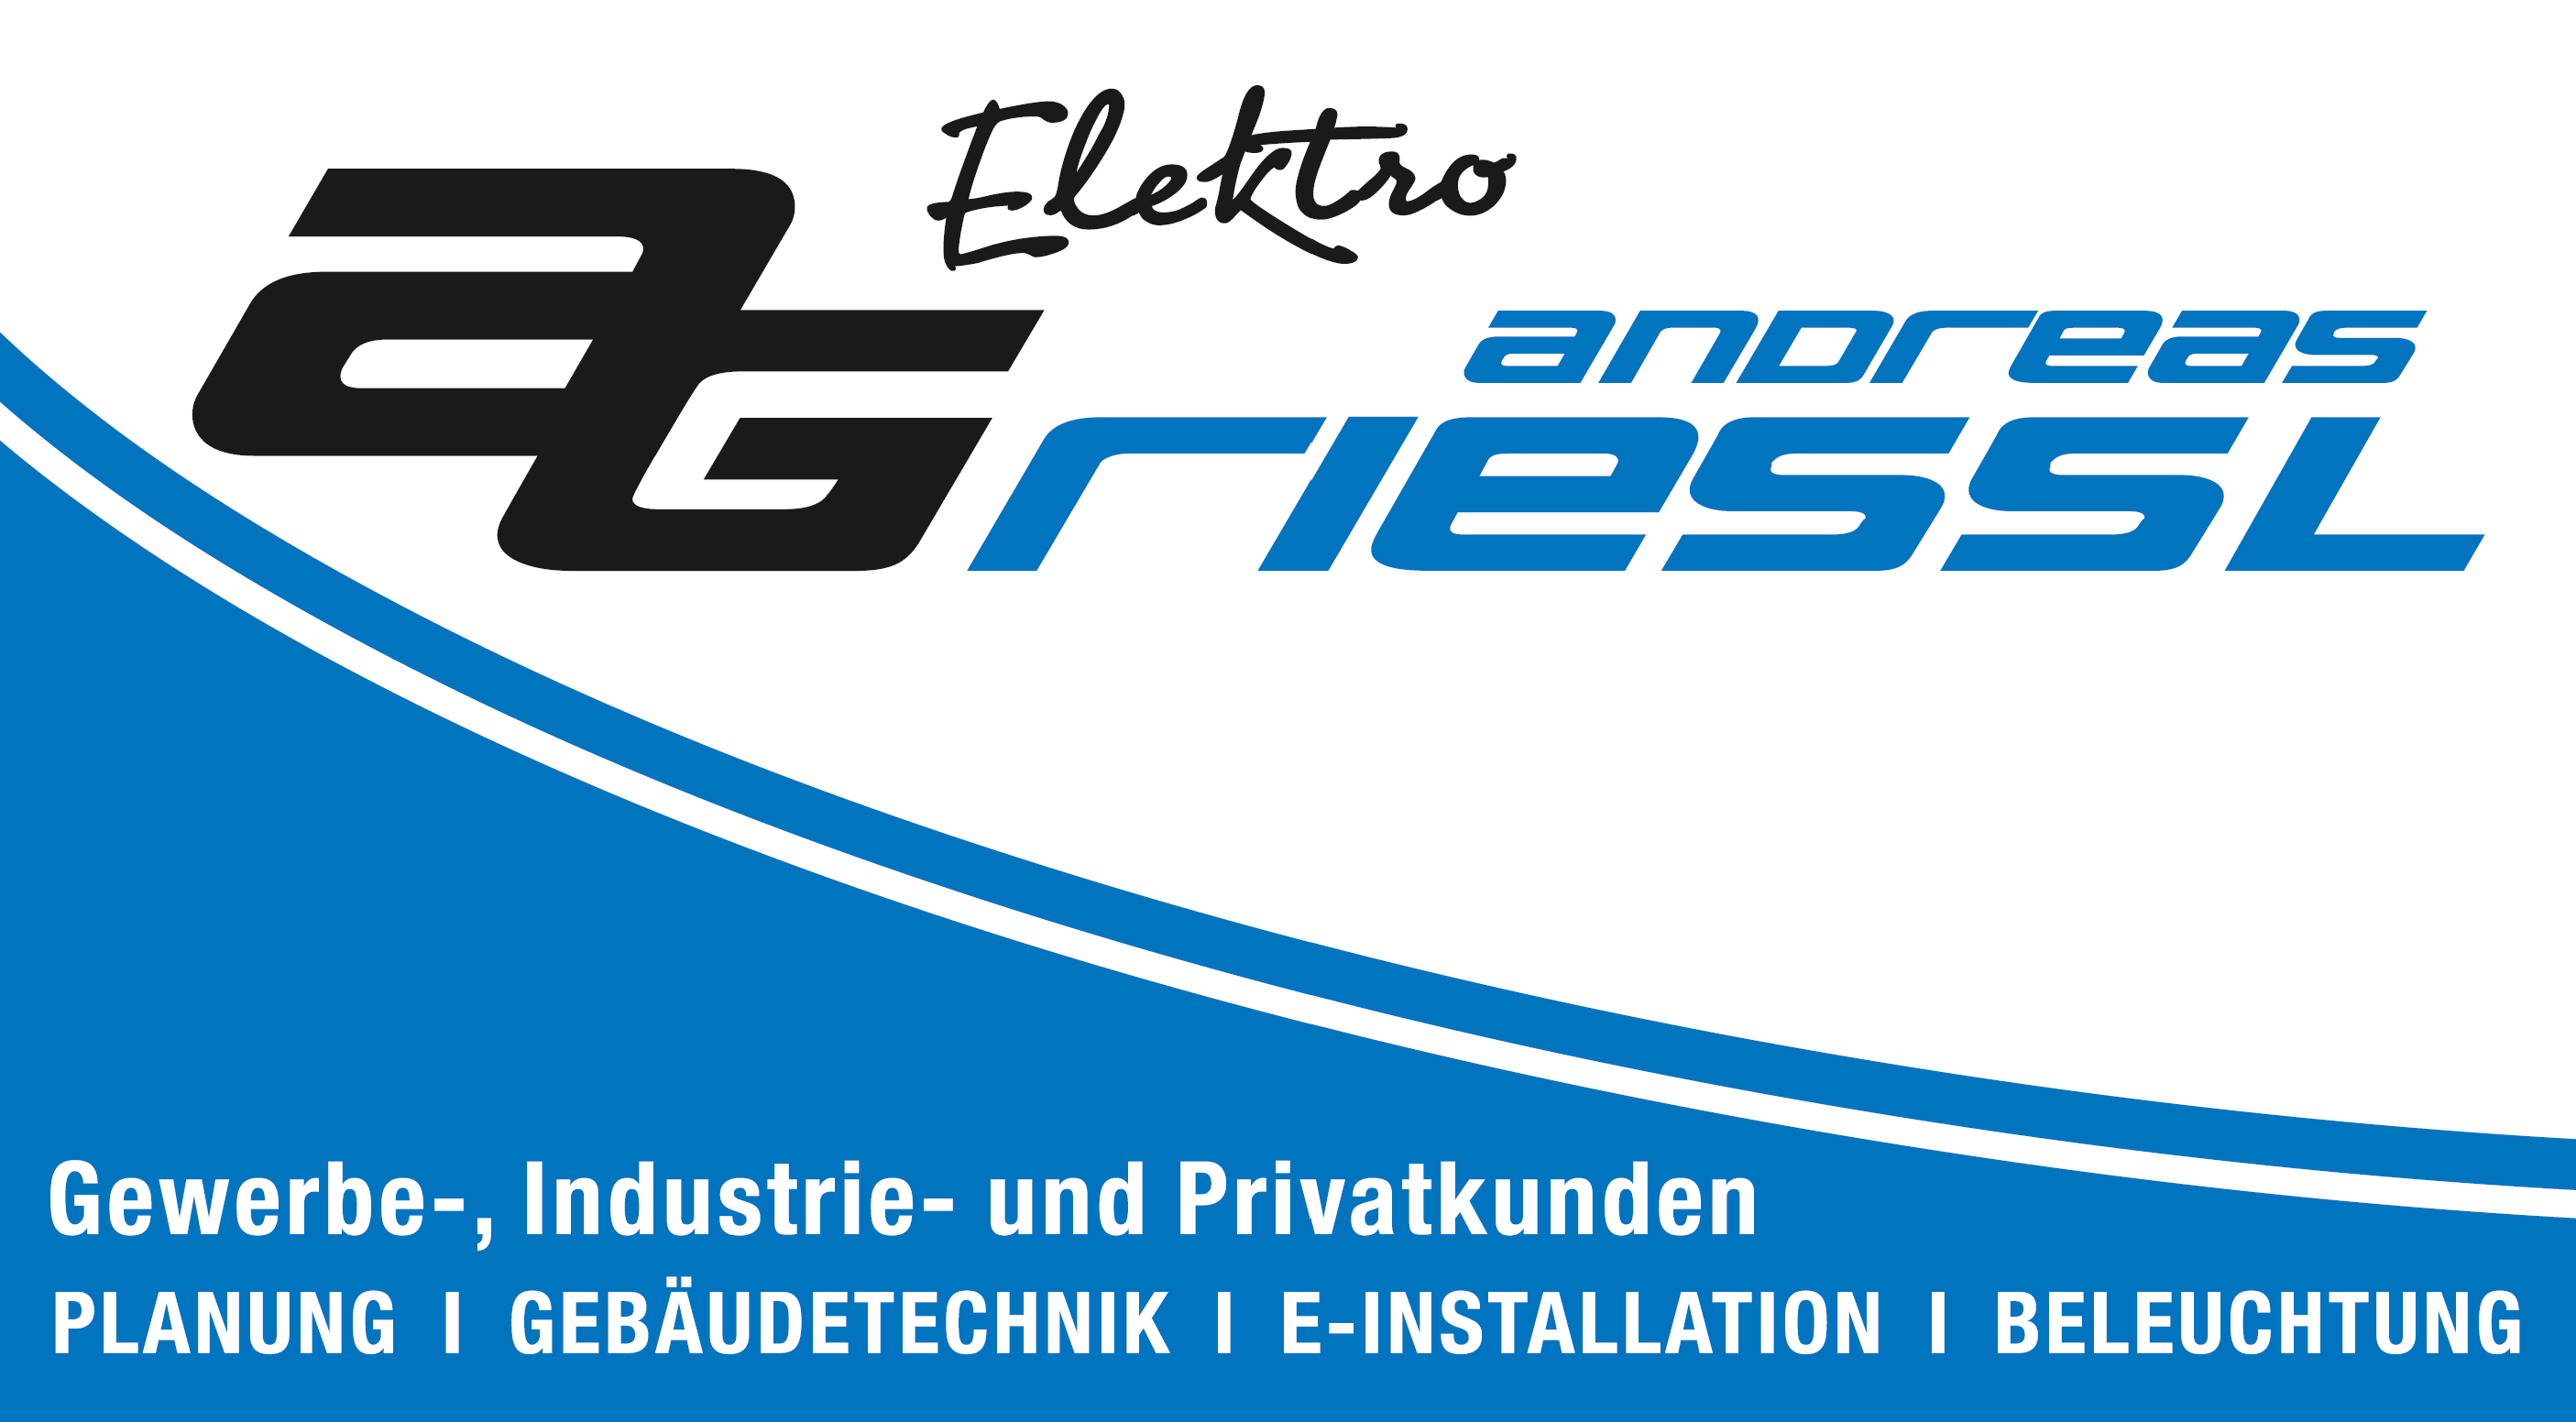 www.elektro-griessl.at